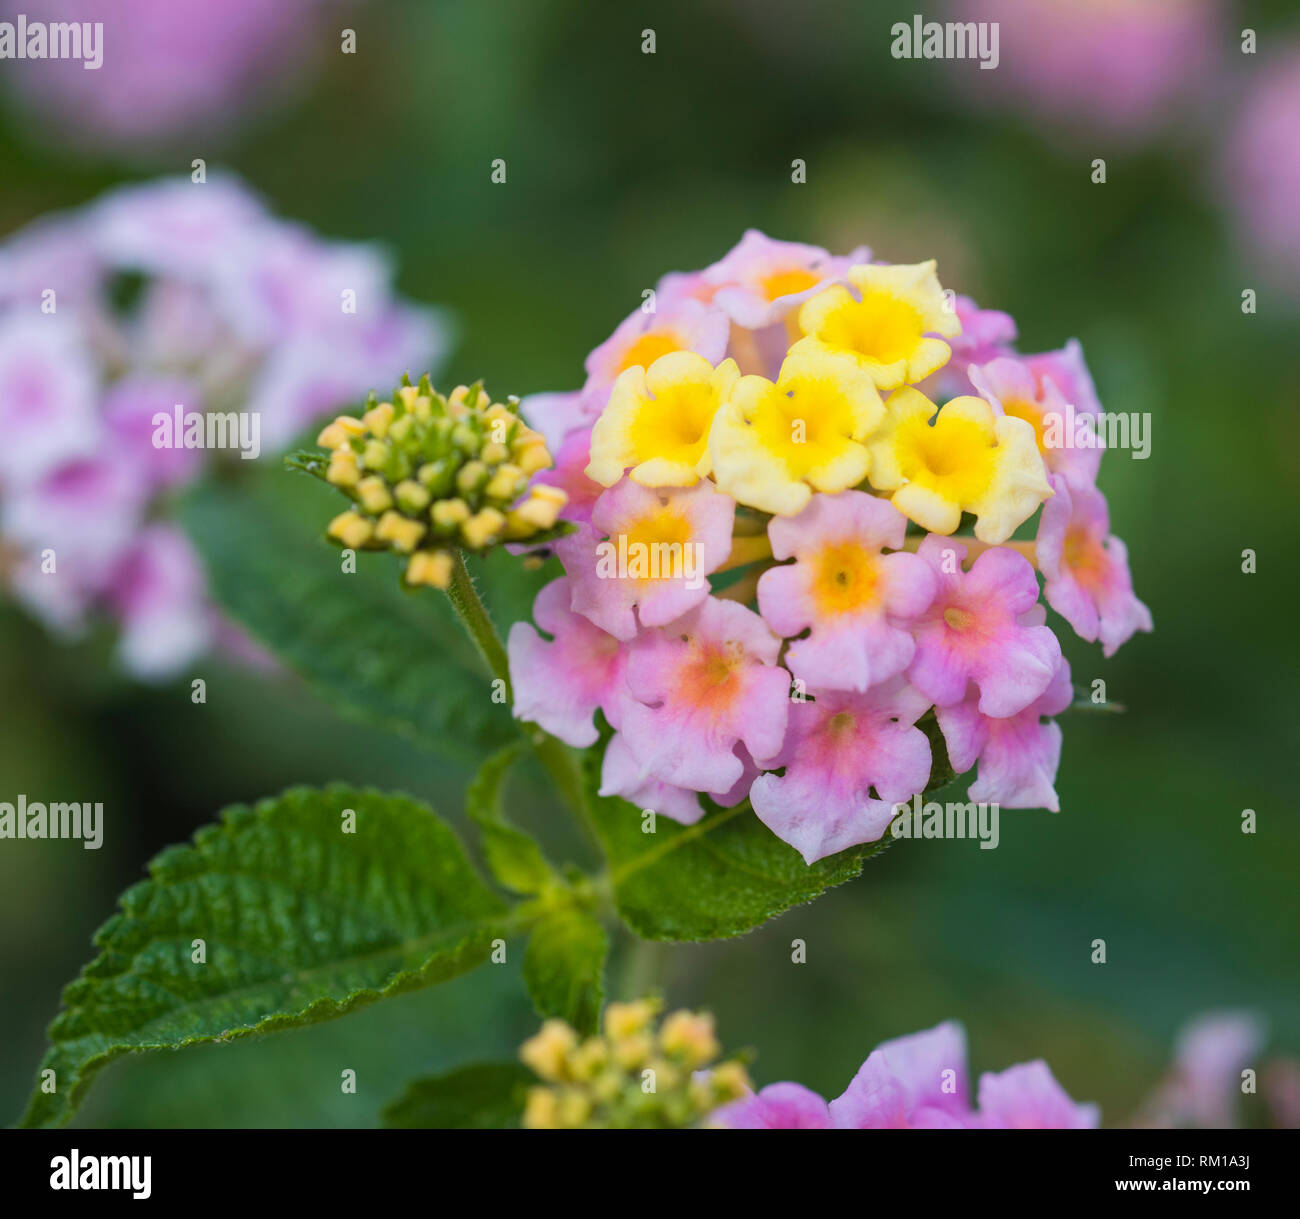 Close-up detail of a pink and yellow rose lantana flower lantana camara in rural garden setting Stock Photo